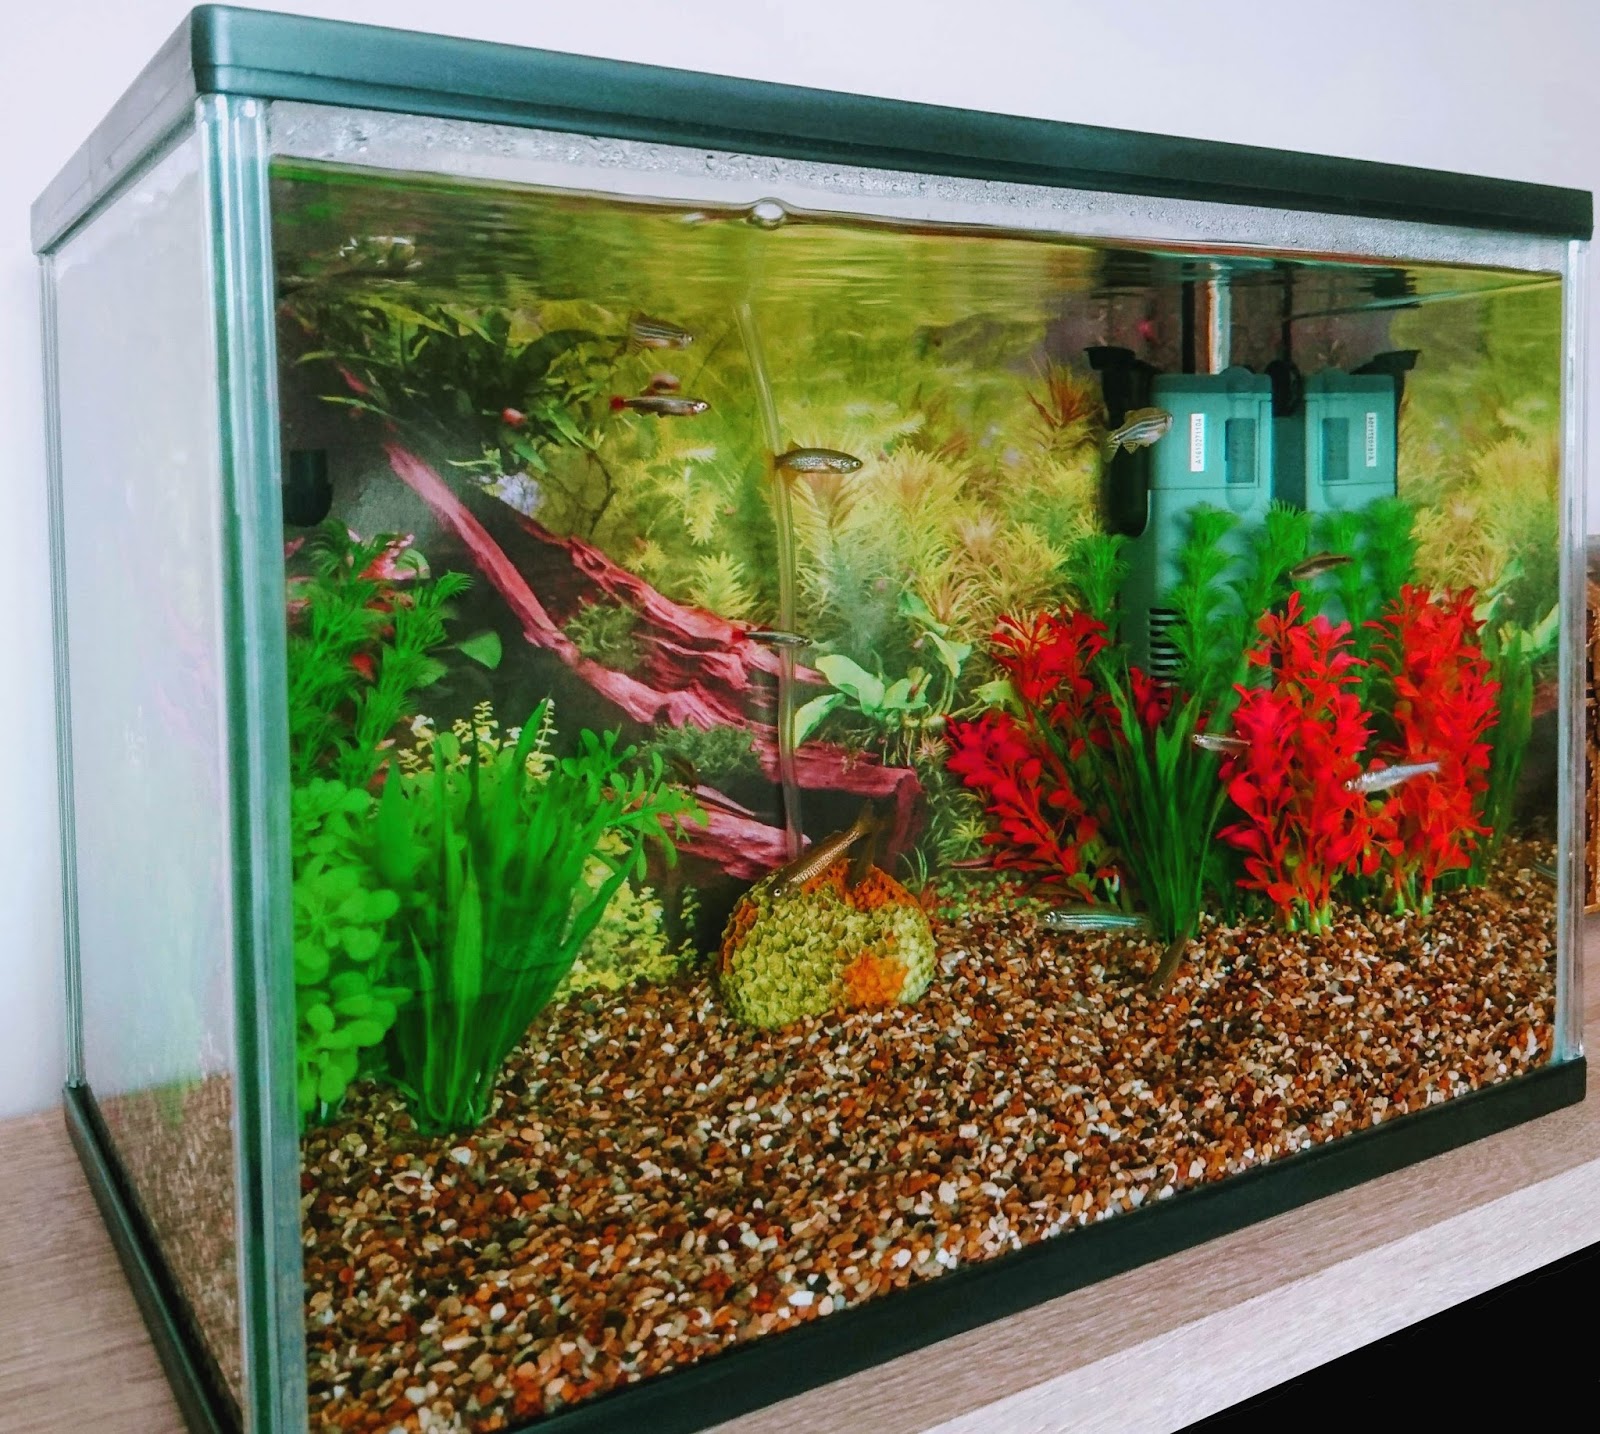 Amateur Aquatics - Keeping fish - Setting up your first fish tank